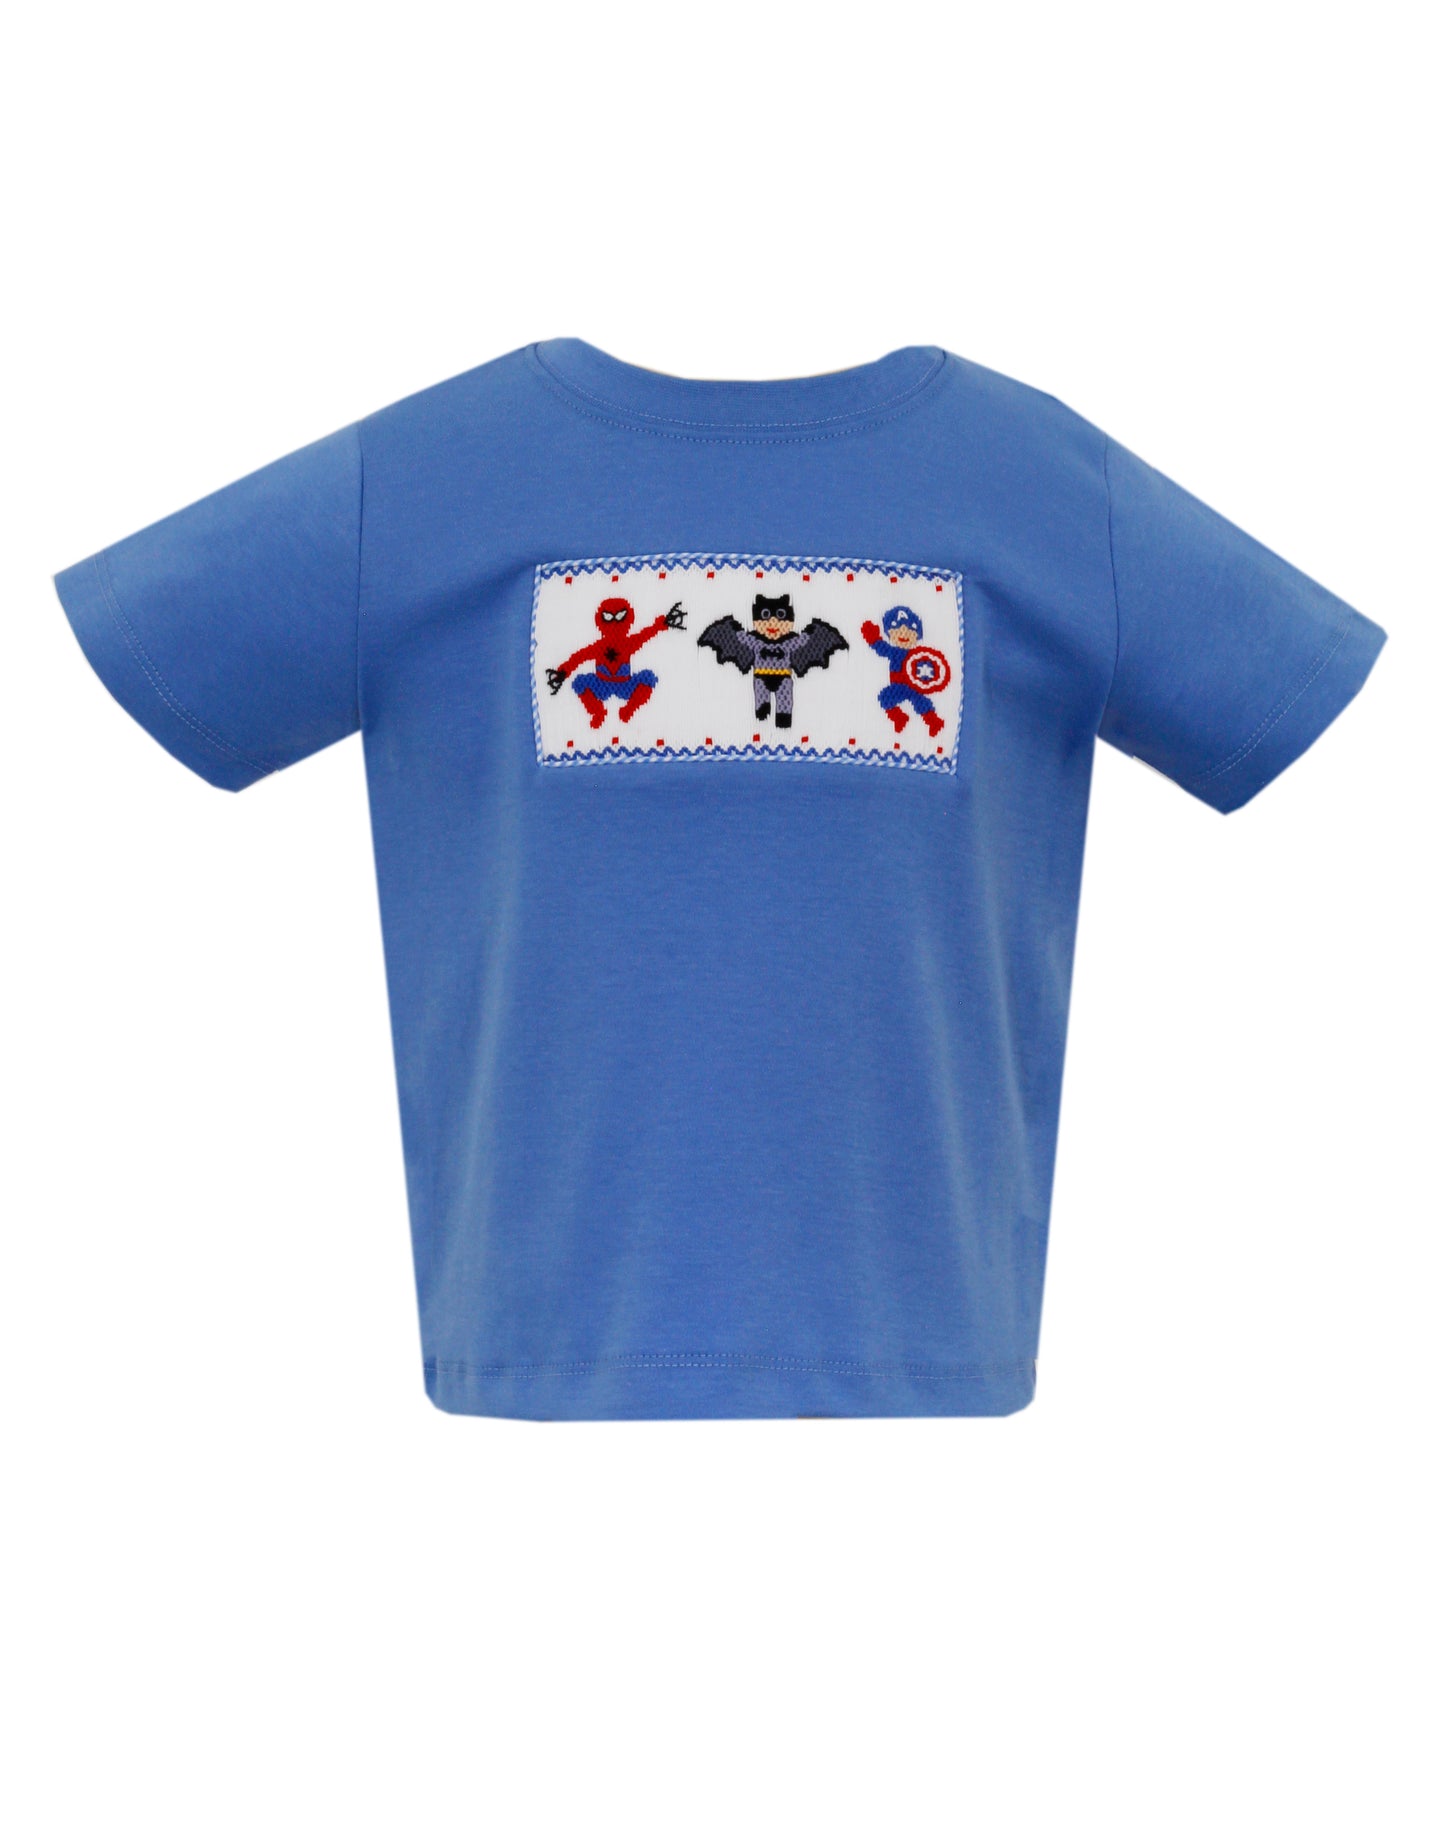 Super Heroes - Peri Blue Knit Boy's T-Shirt